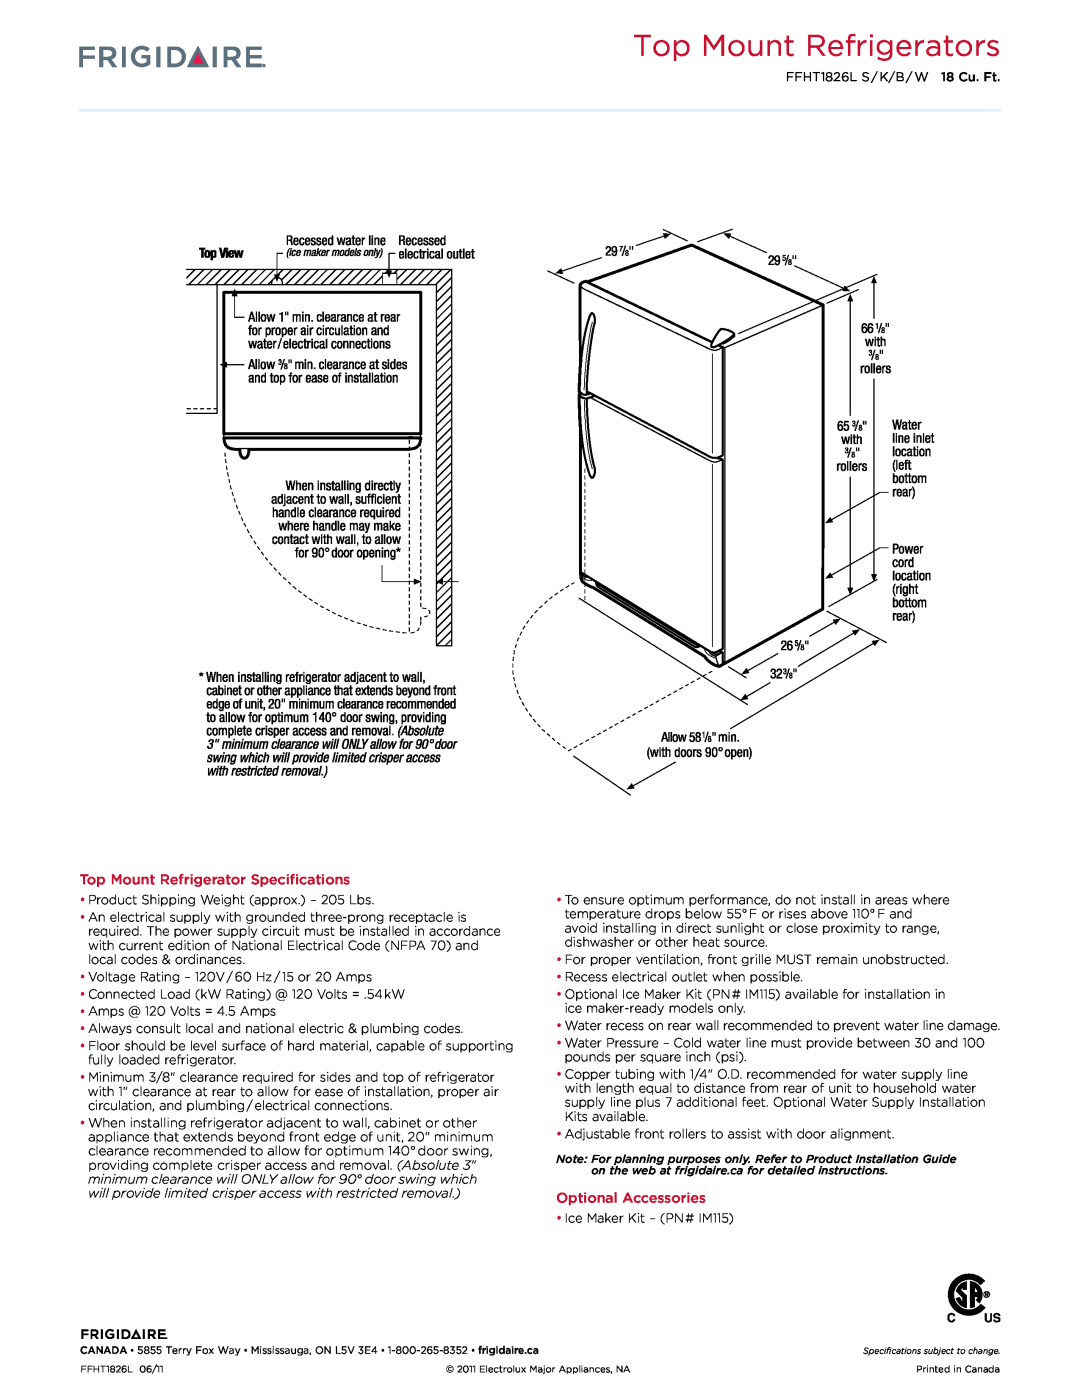 Frigidaire IM115 dimensions Top Mount Refrigerators, Top Mount Refrigerator Specifications, Optional Accessories 